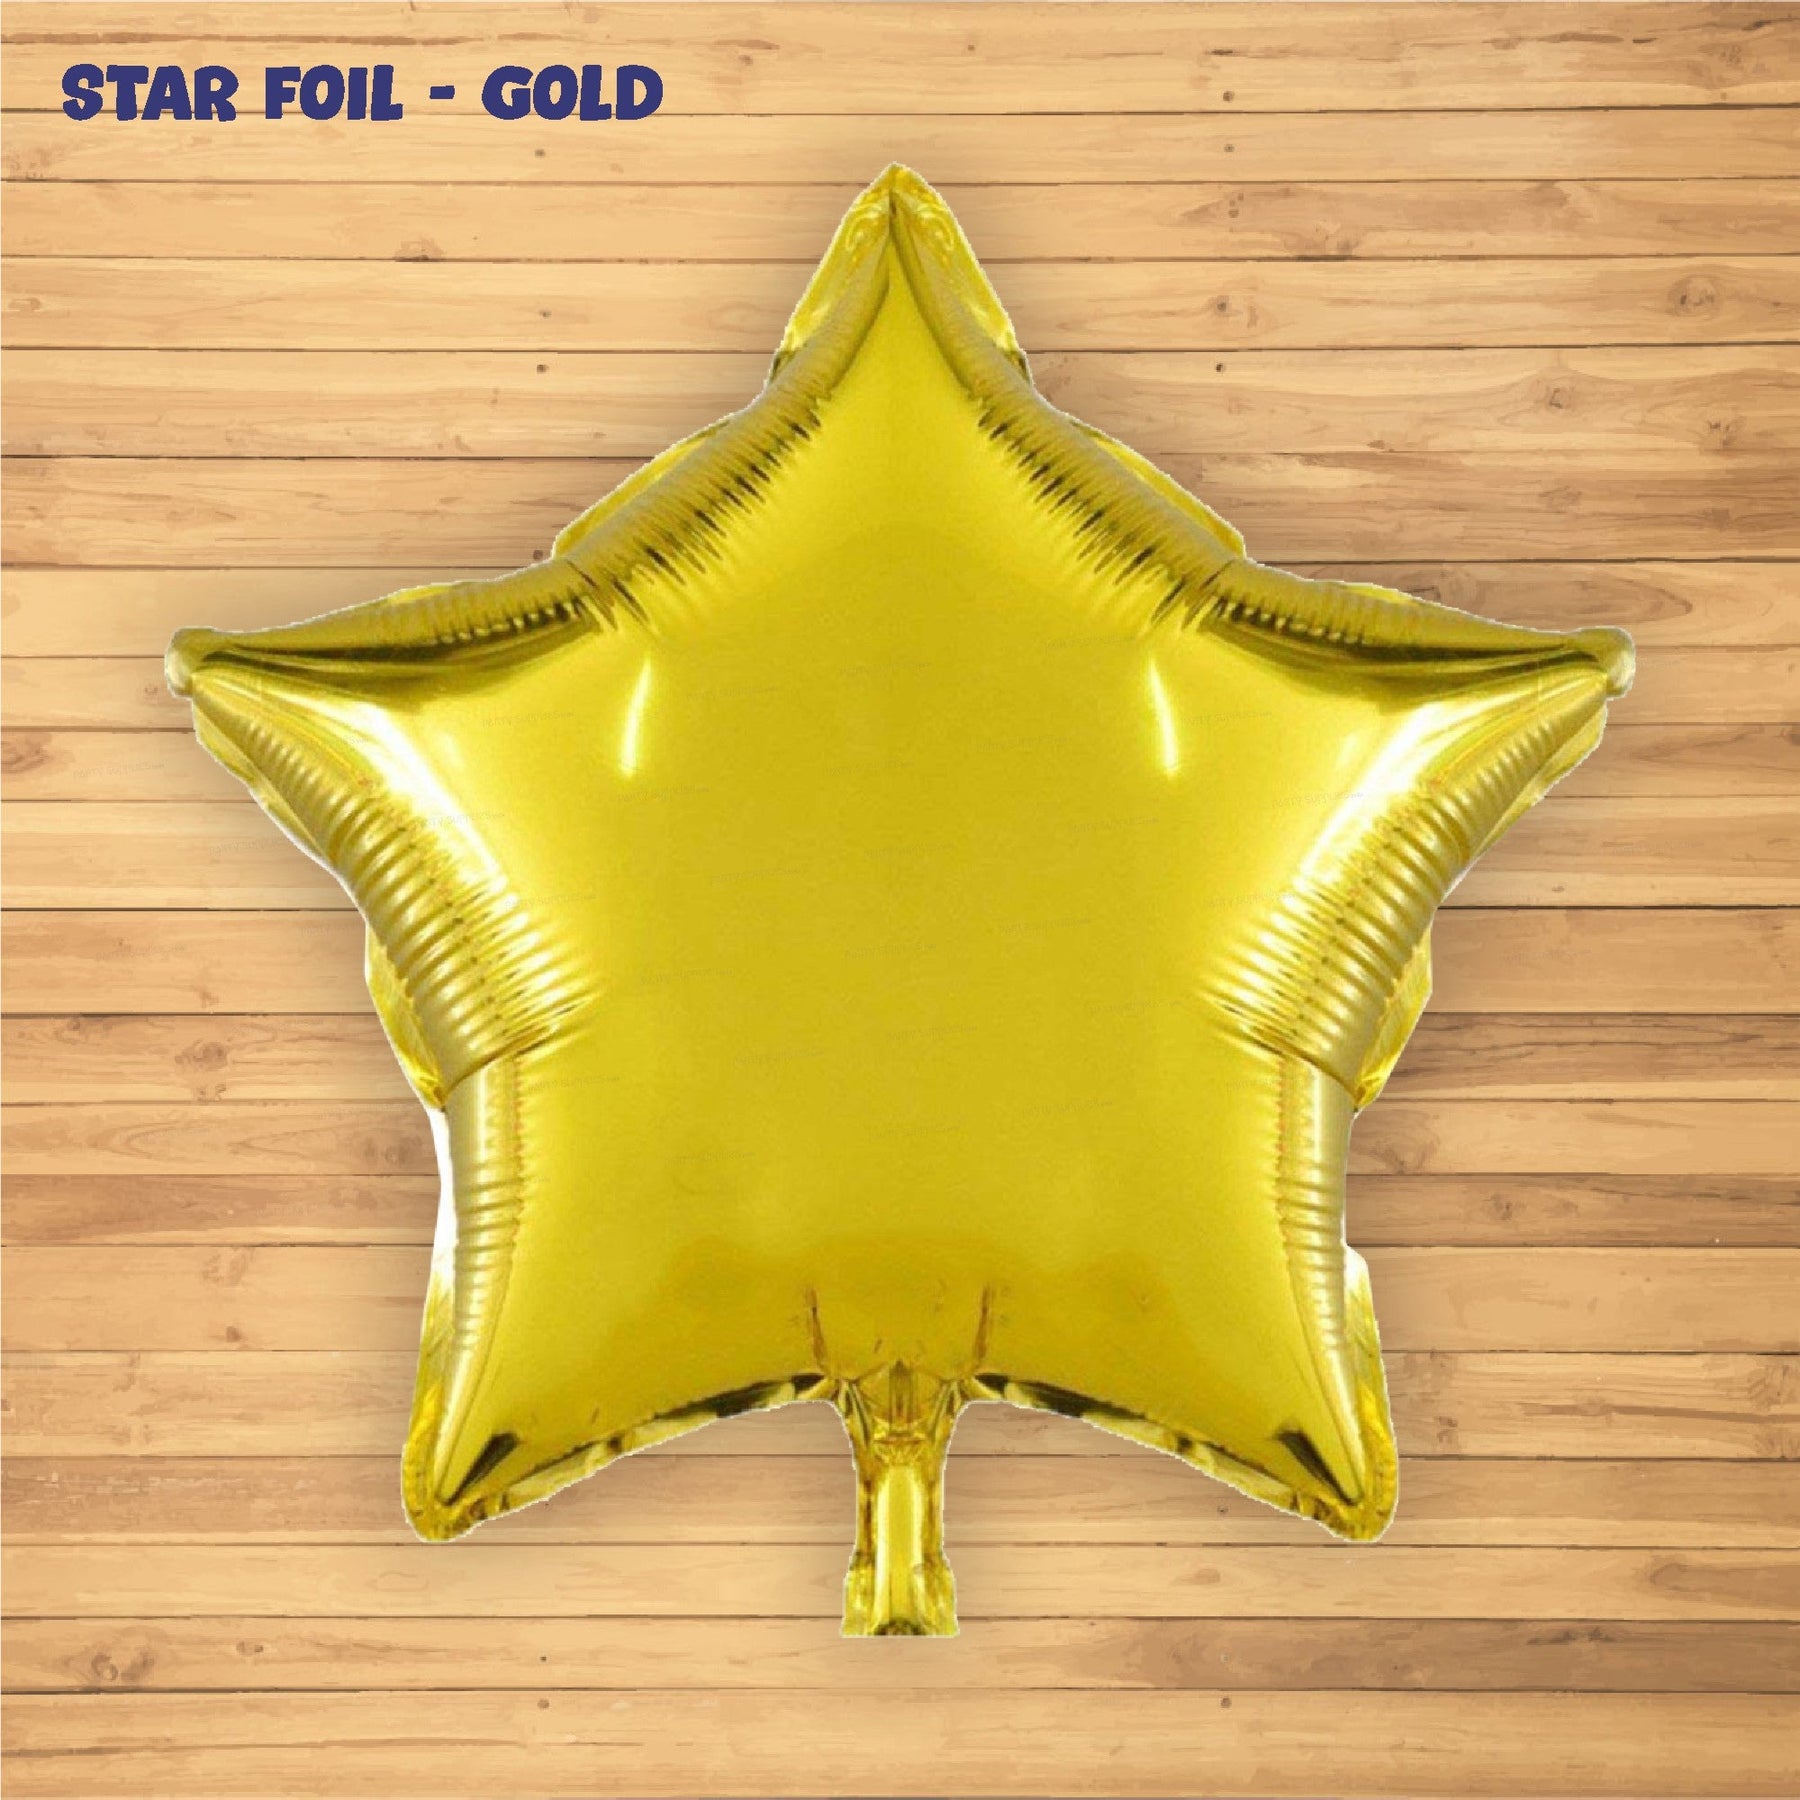 Star Shape Premium Gold Foil Balloon